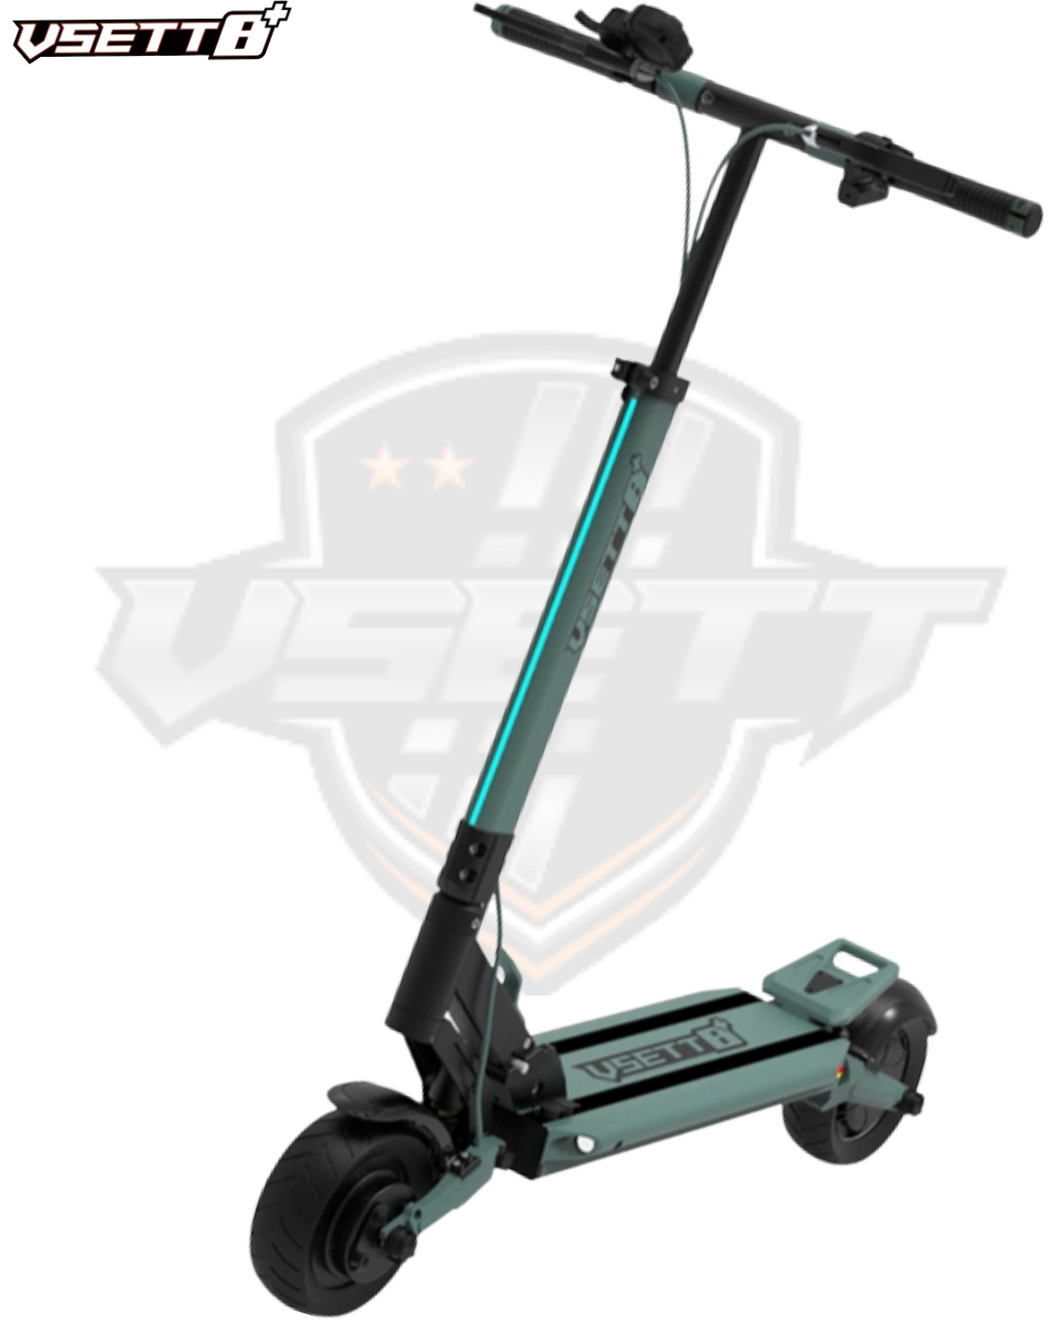 VSETT 8+ Dual Motor Electric Scooter